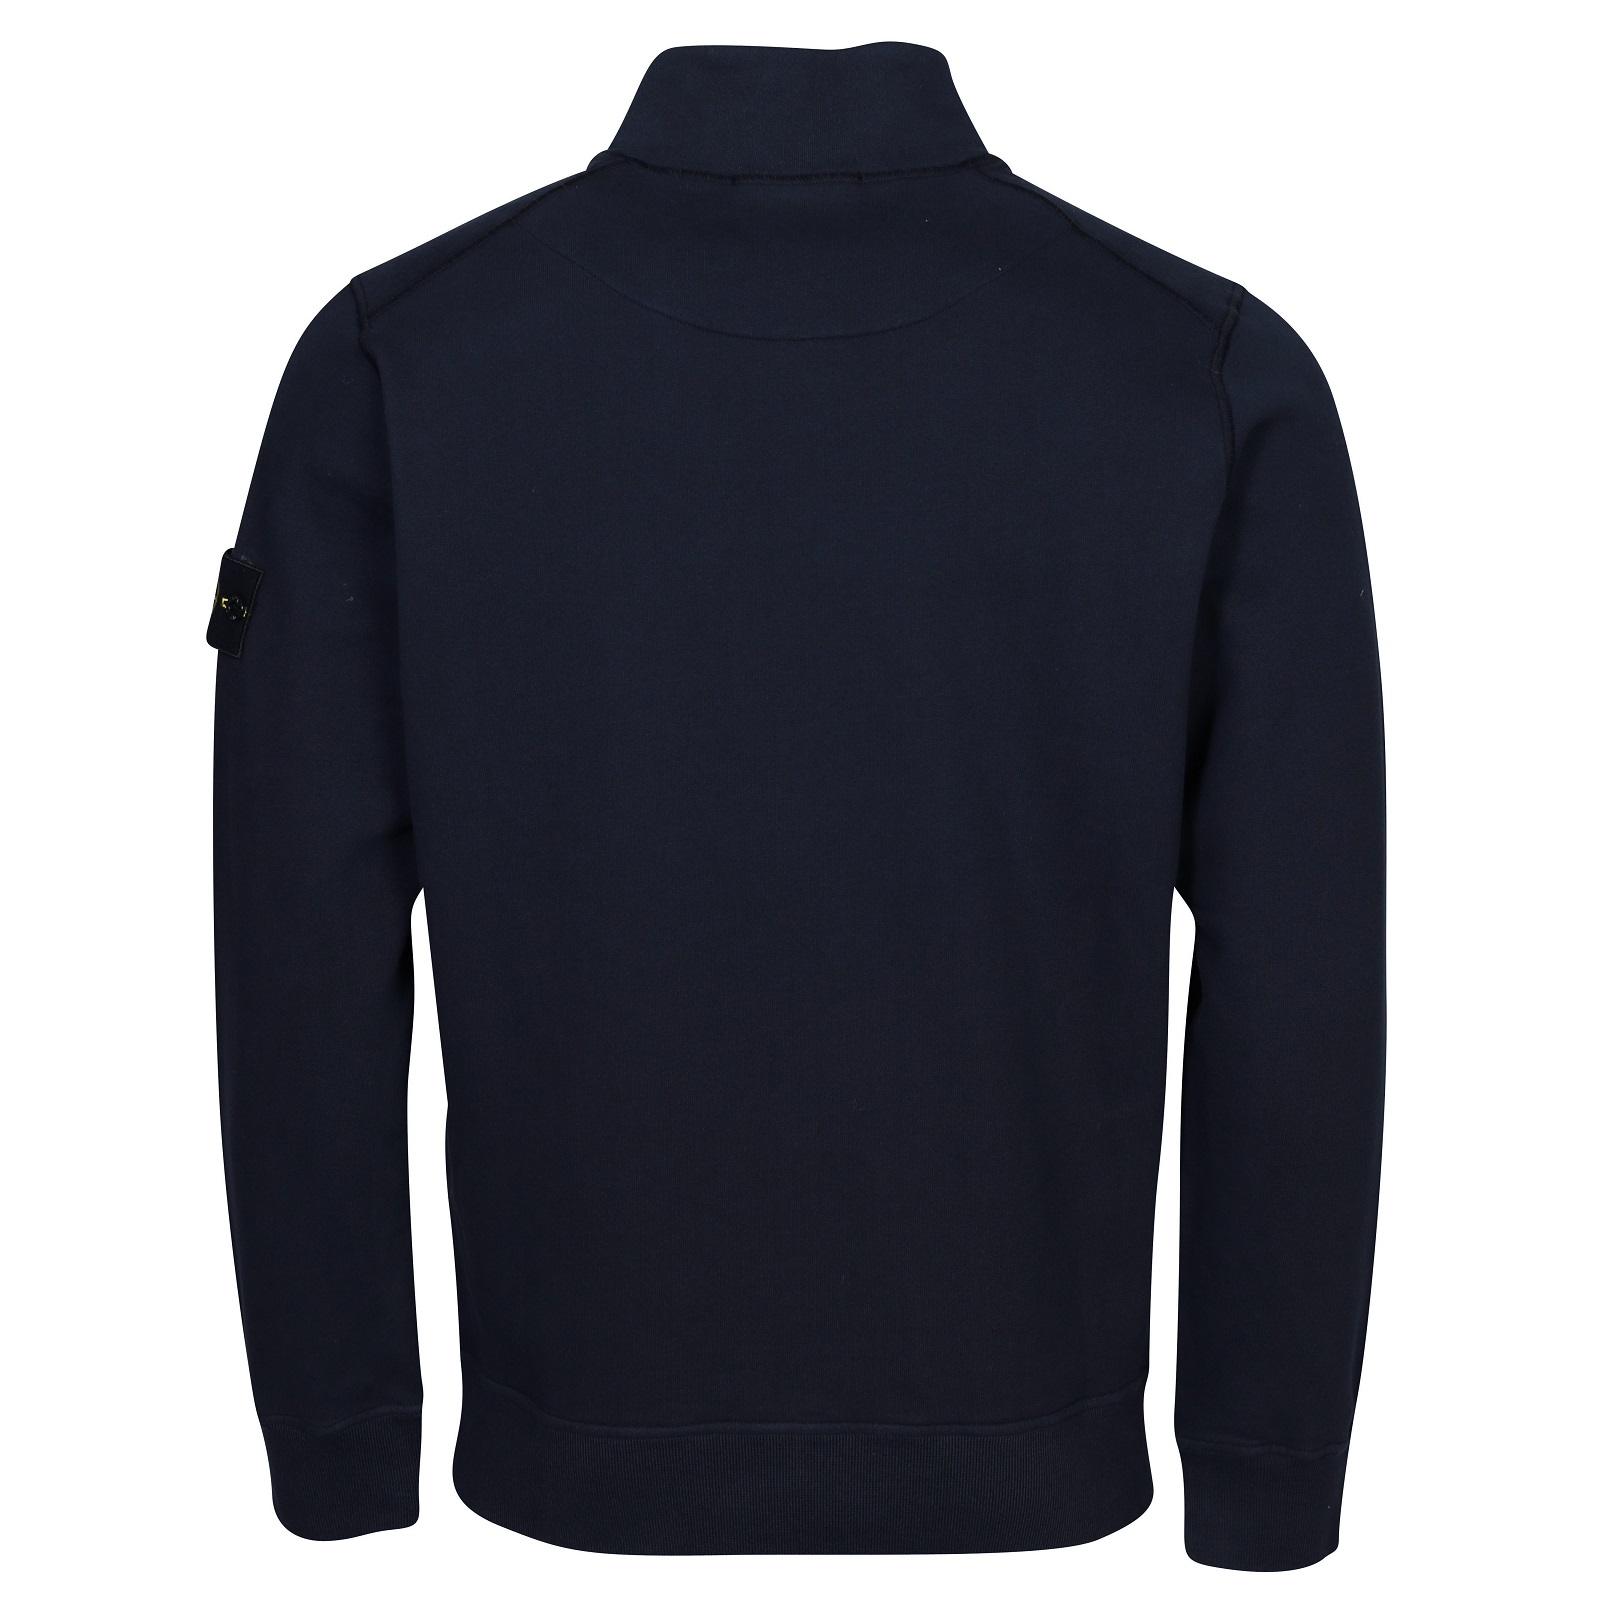 STONE ISLAND Half Zip Sweatshirt in Navy Blue 2XL